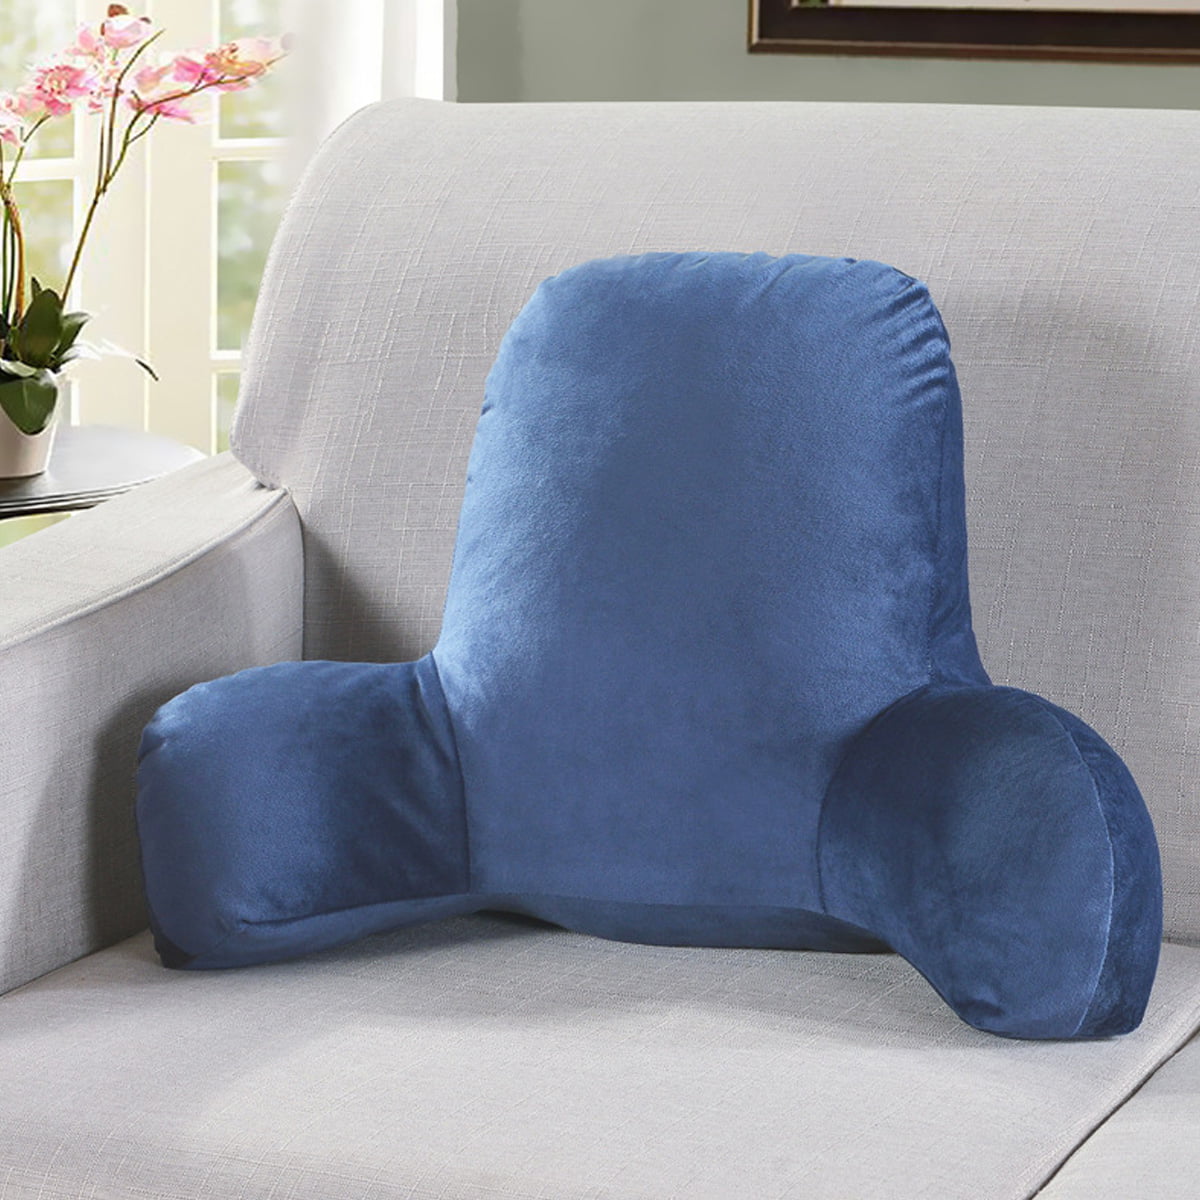 TV 2020 Model OL17 NEW Gaming Backrest for Books ORTHOLOGICS Reading Pillow Back Rest Lumbar Support Arm Seat Cushion Lounger Plush 